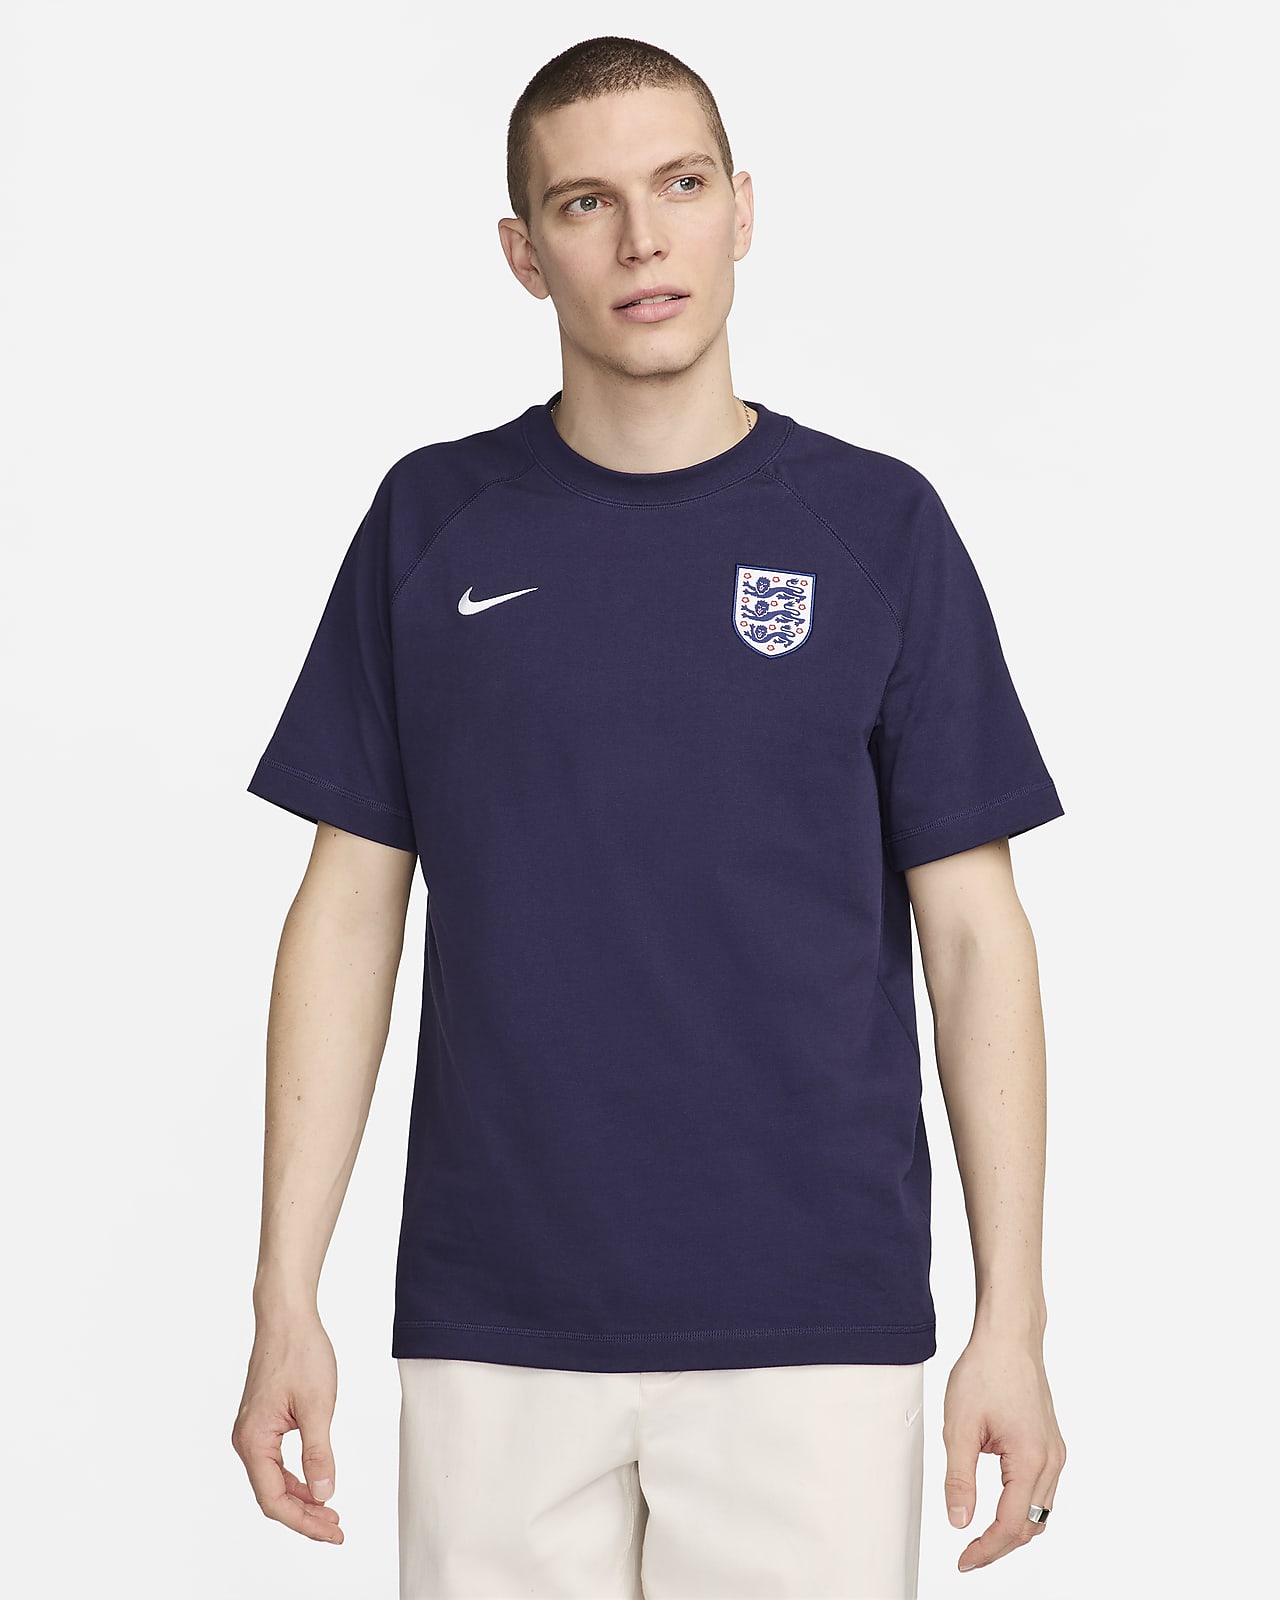 England Travel Nike Football Short-Sleeve Top